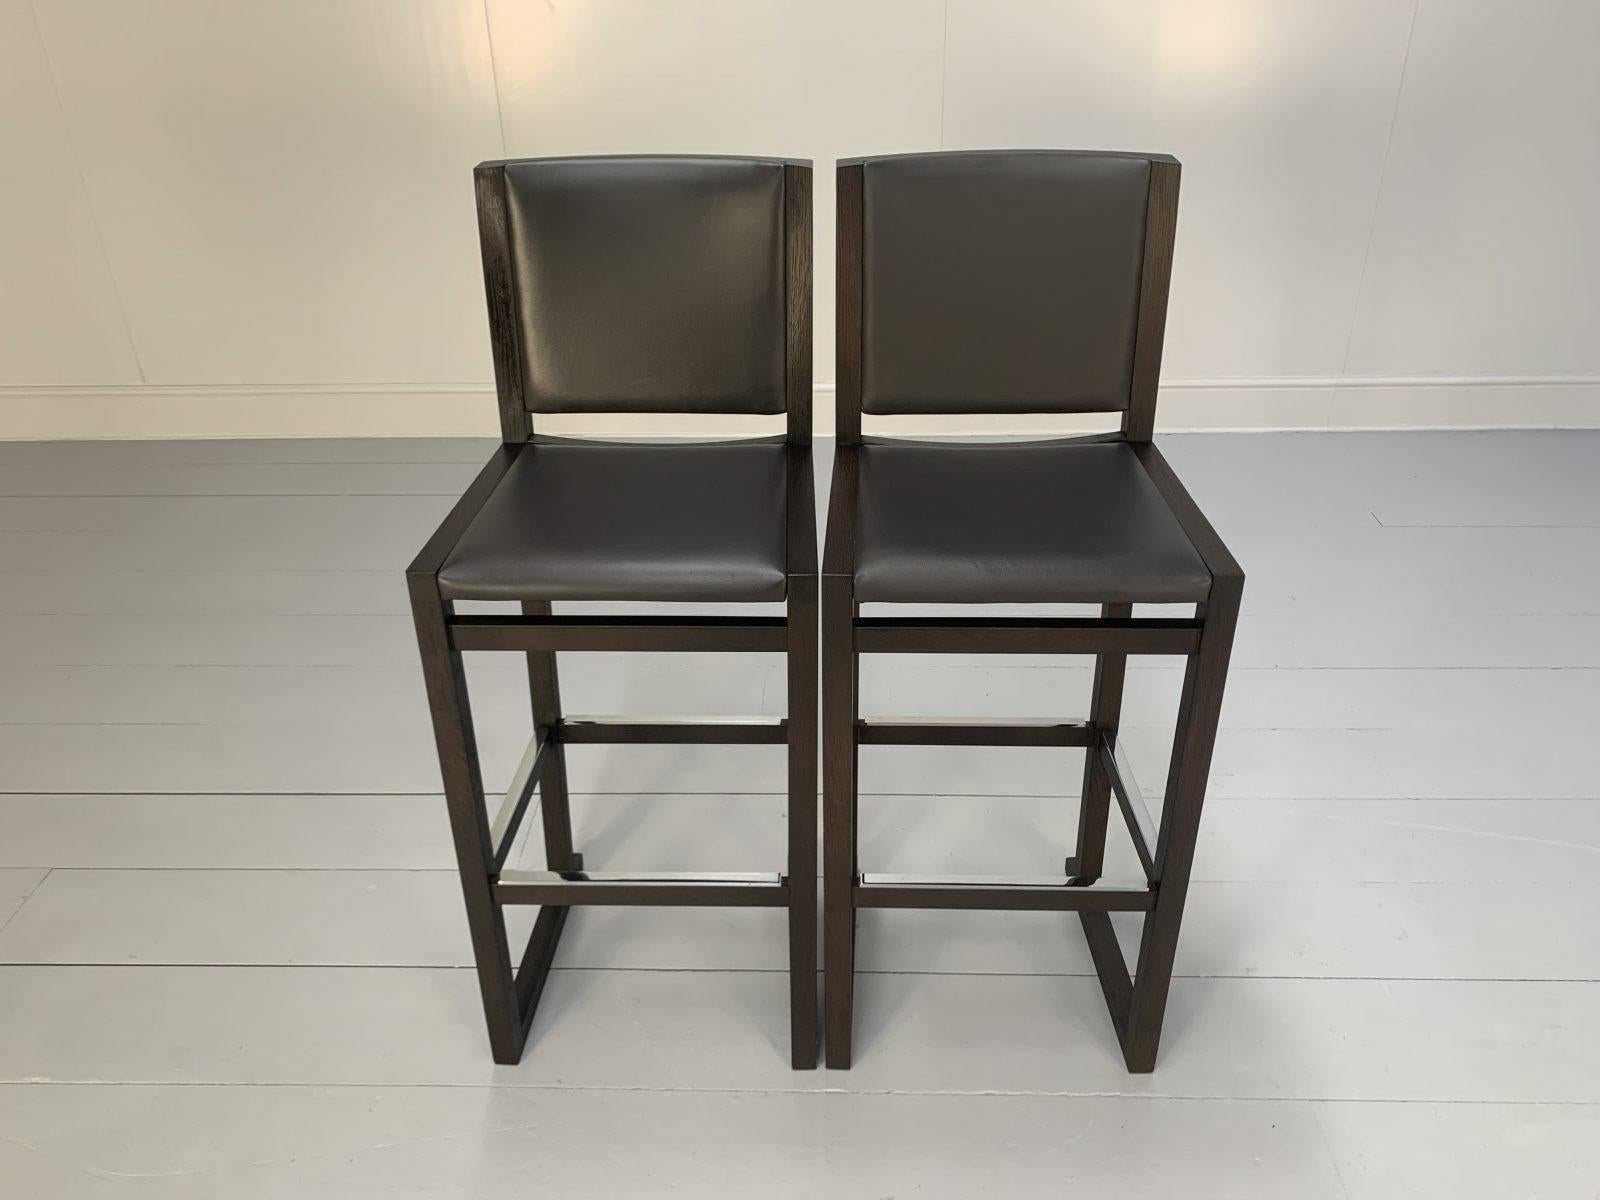 Pair of B&B Italia “Musa SM46G” Tall Bar Stool Chairs – In Dark Grey “Kasia” Lea In Good Condition For Sale In Barrowford, GB